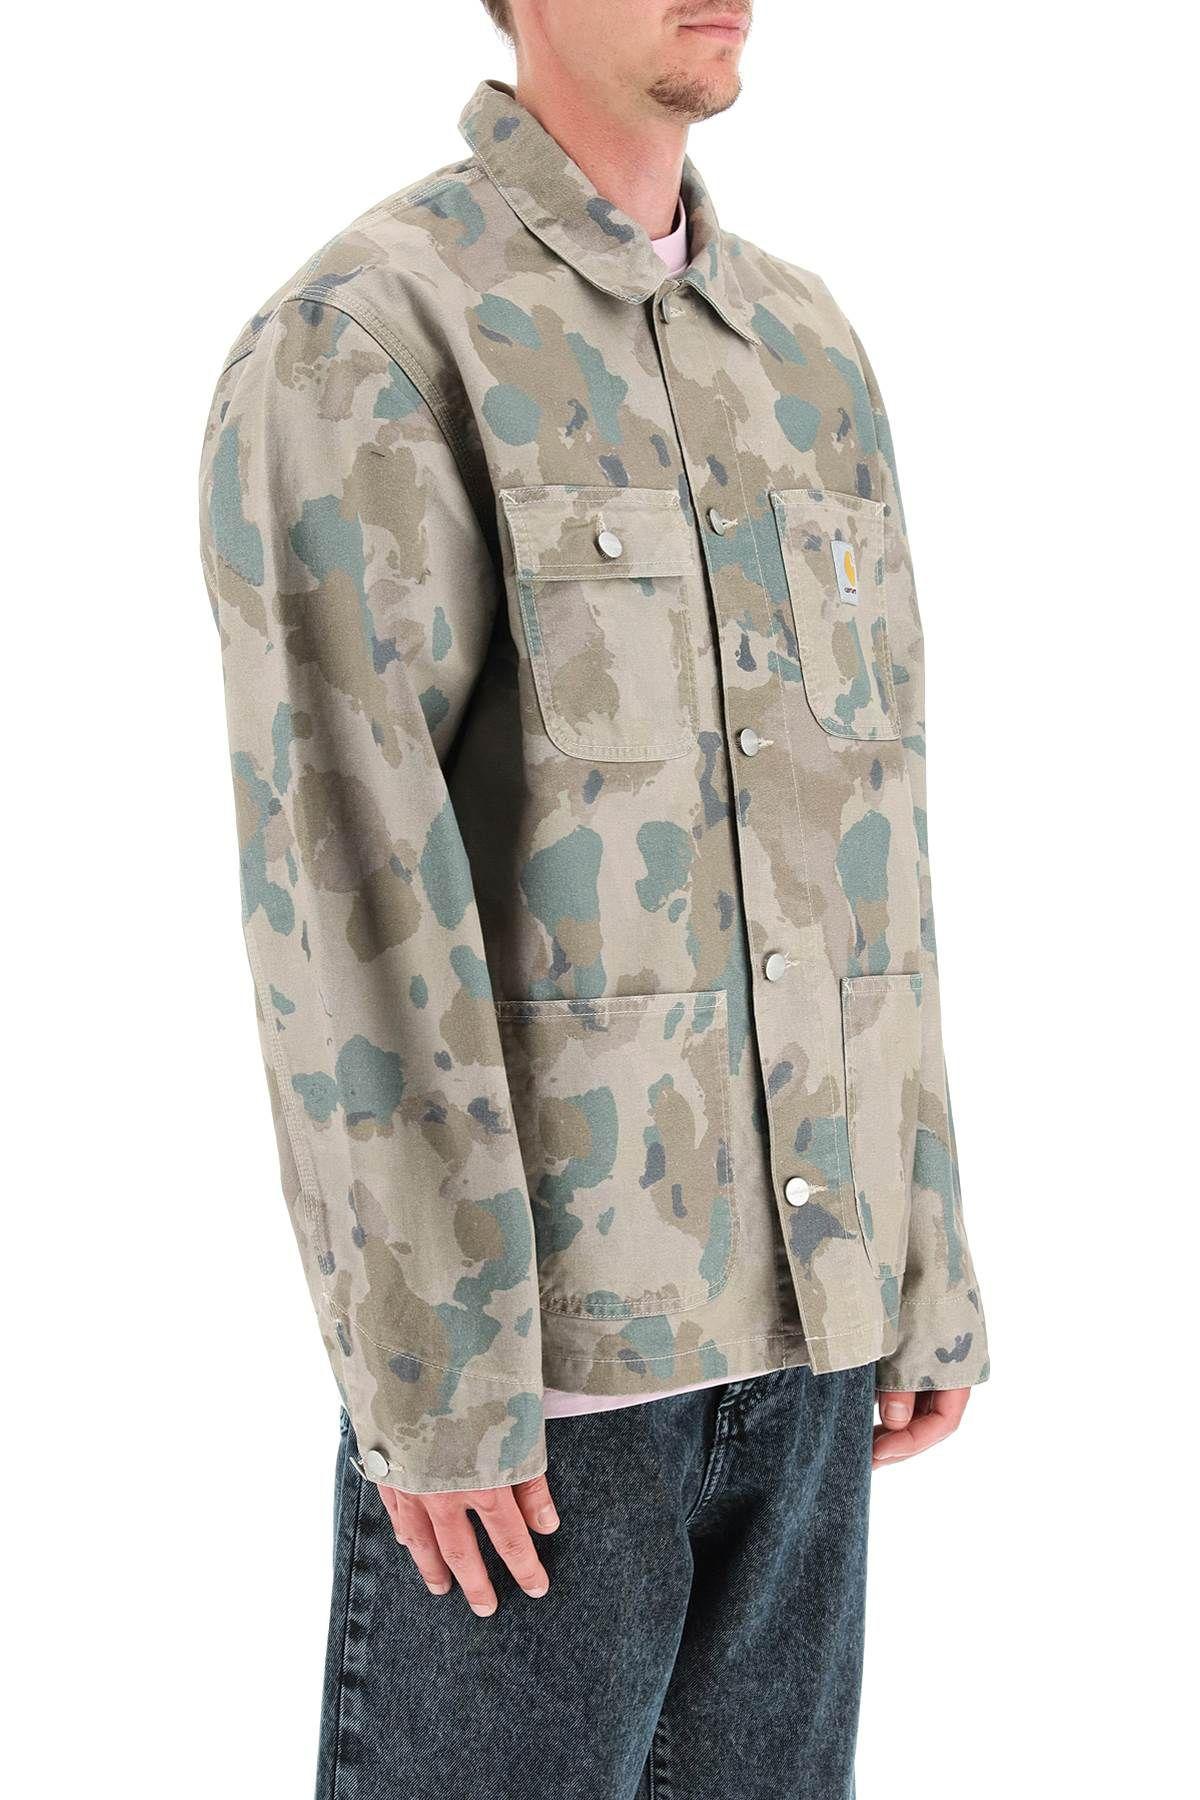 CARHARTT WIP Carhartt Wip Michigan Jacket In Camouflage Drill - Stylemyle